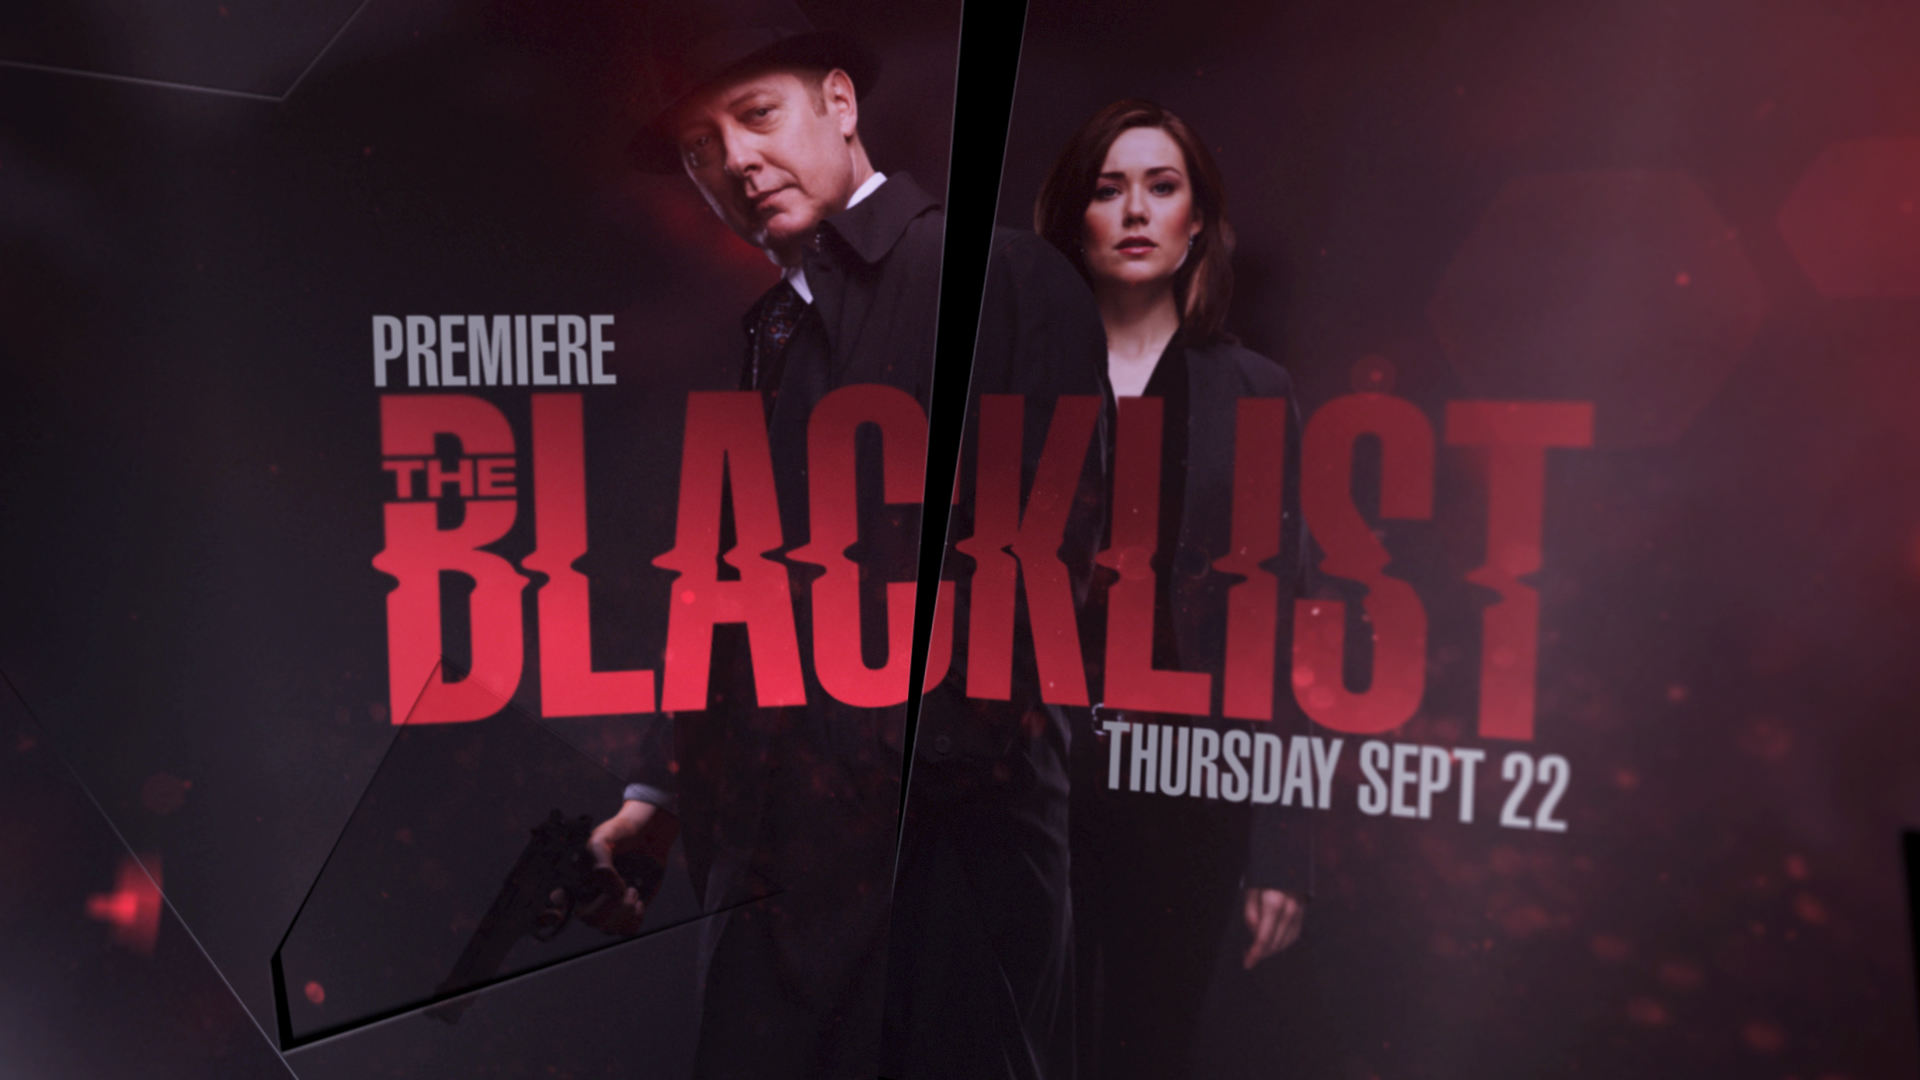 The Blacklist (Season 4) | On-Air Promotion Brand Pkg on Behance